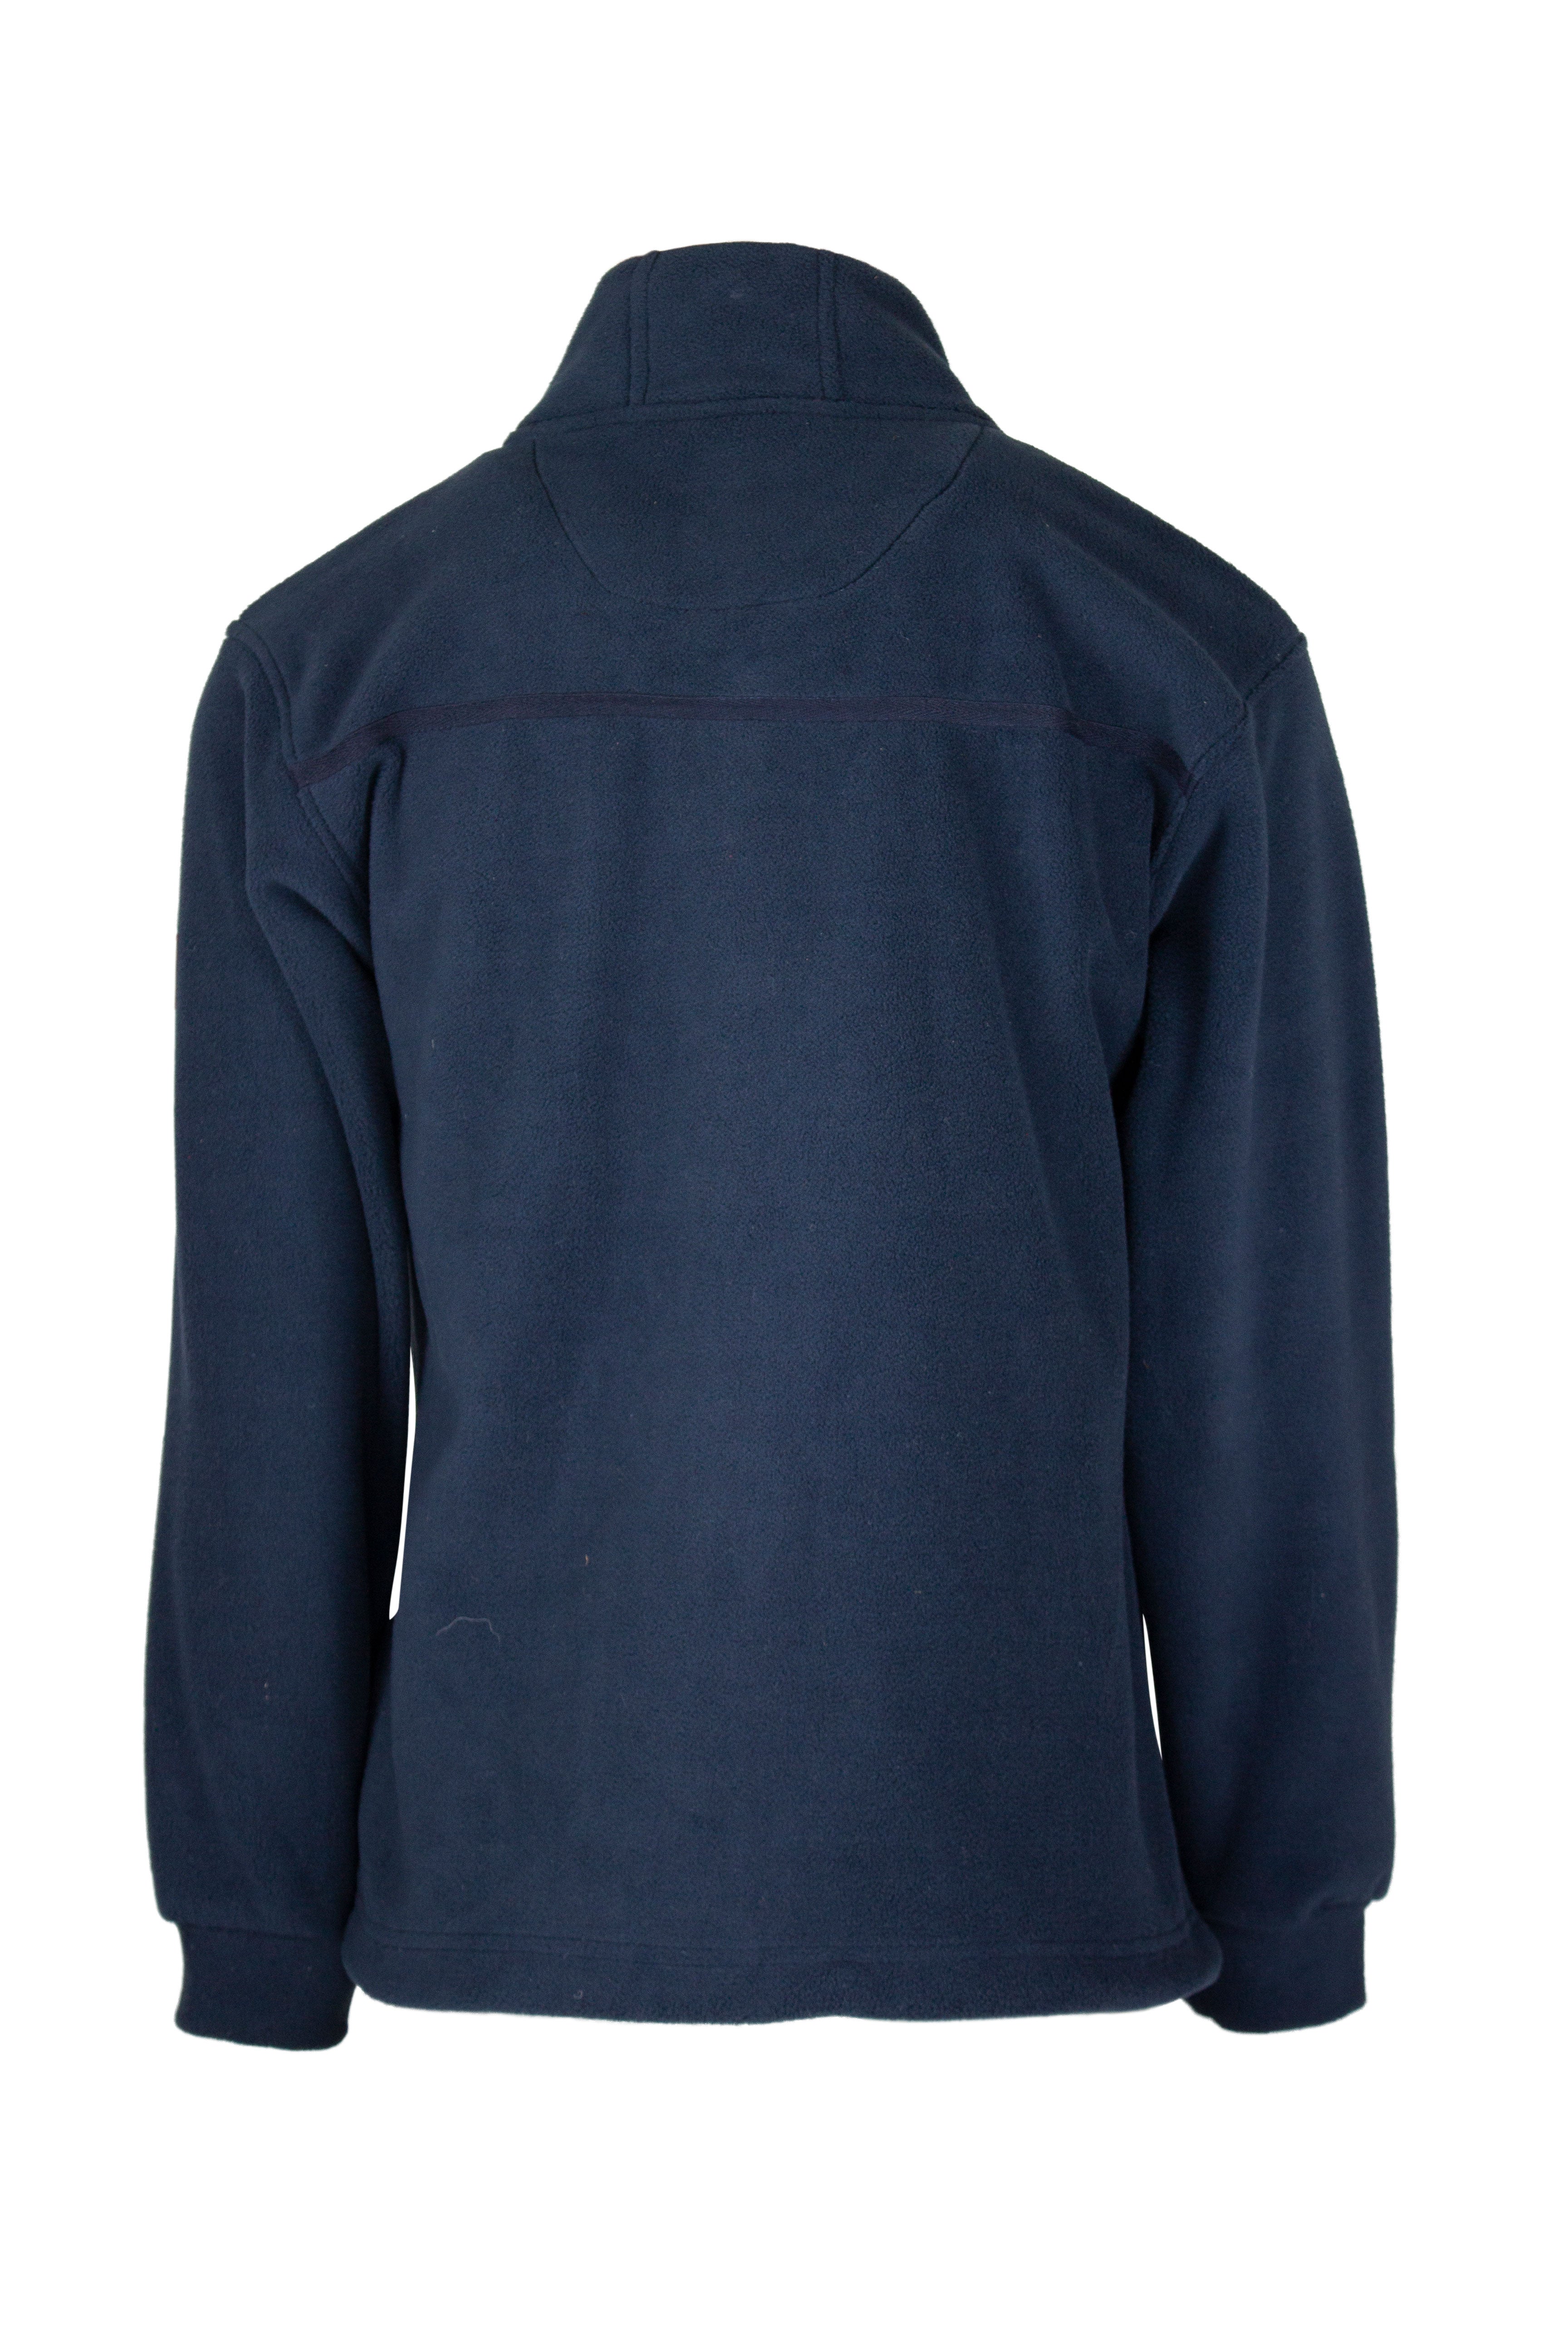 LF202 - Ladie's Fleece Jacket - NAVY - Oxford Blue